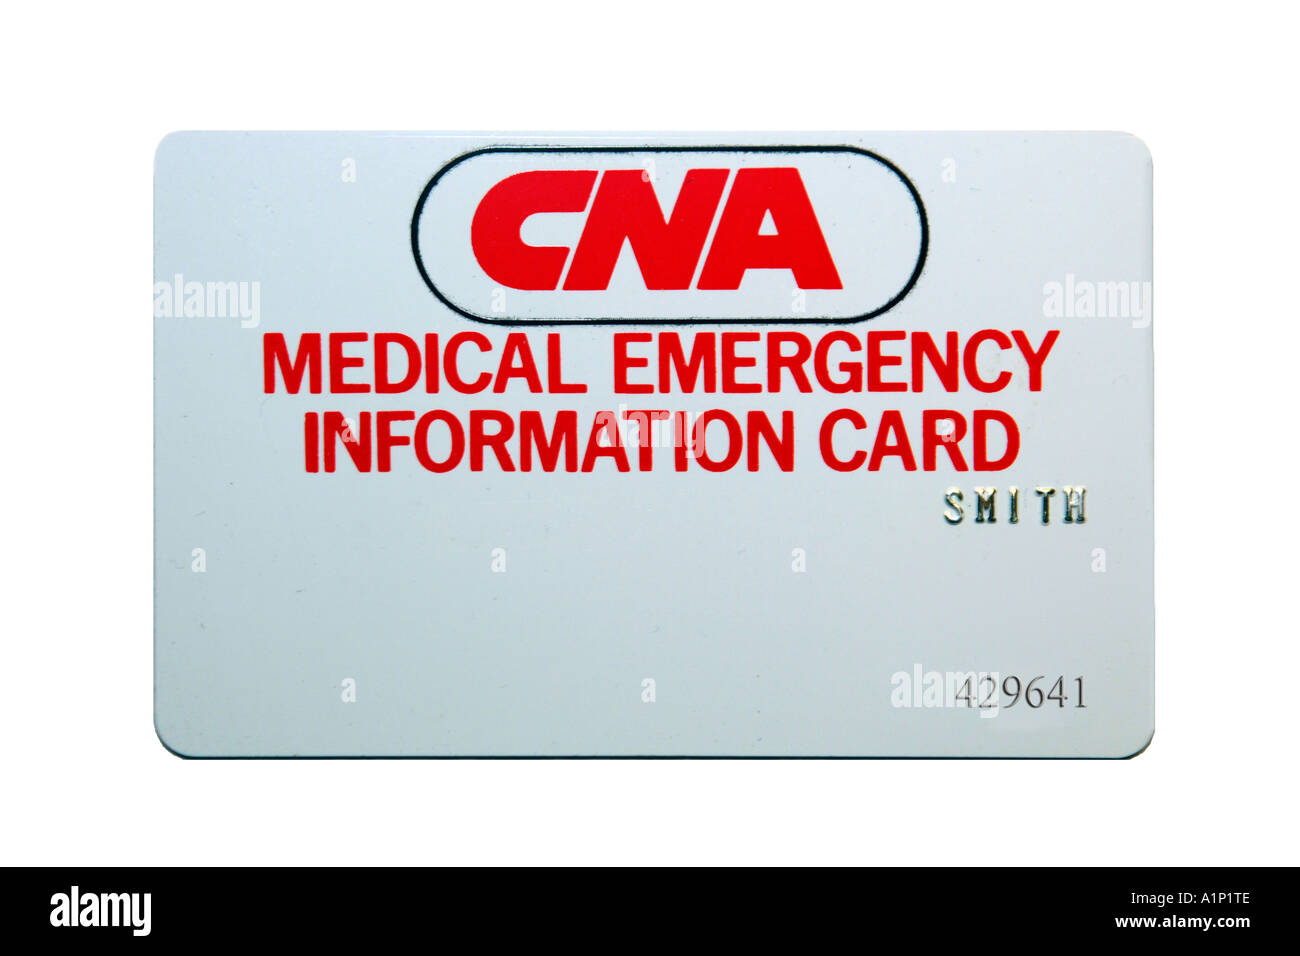 CNA American Health Insurance Medical Card Stock Photo